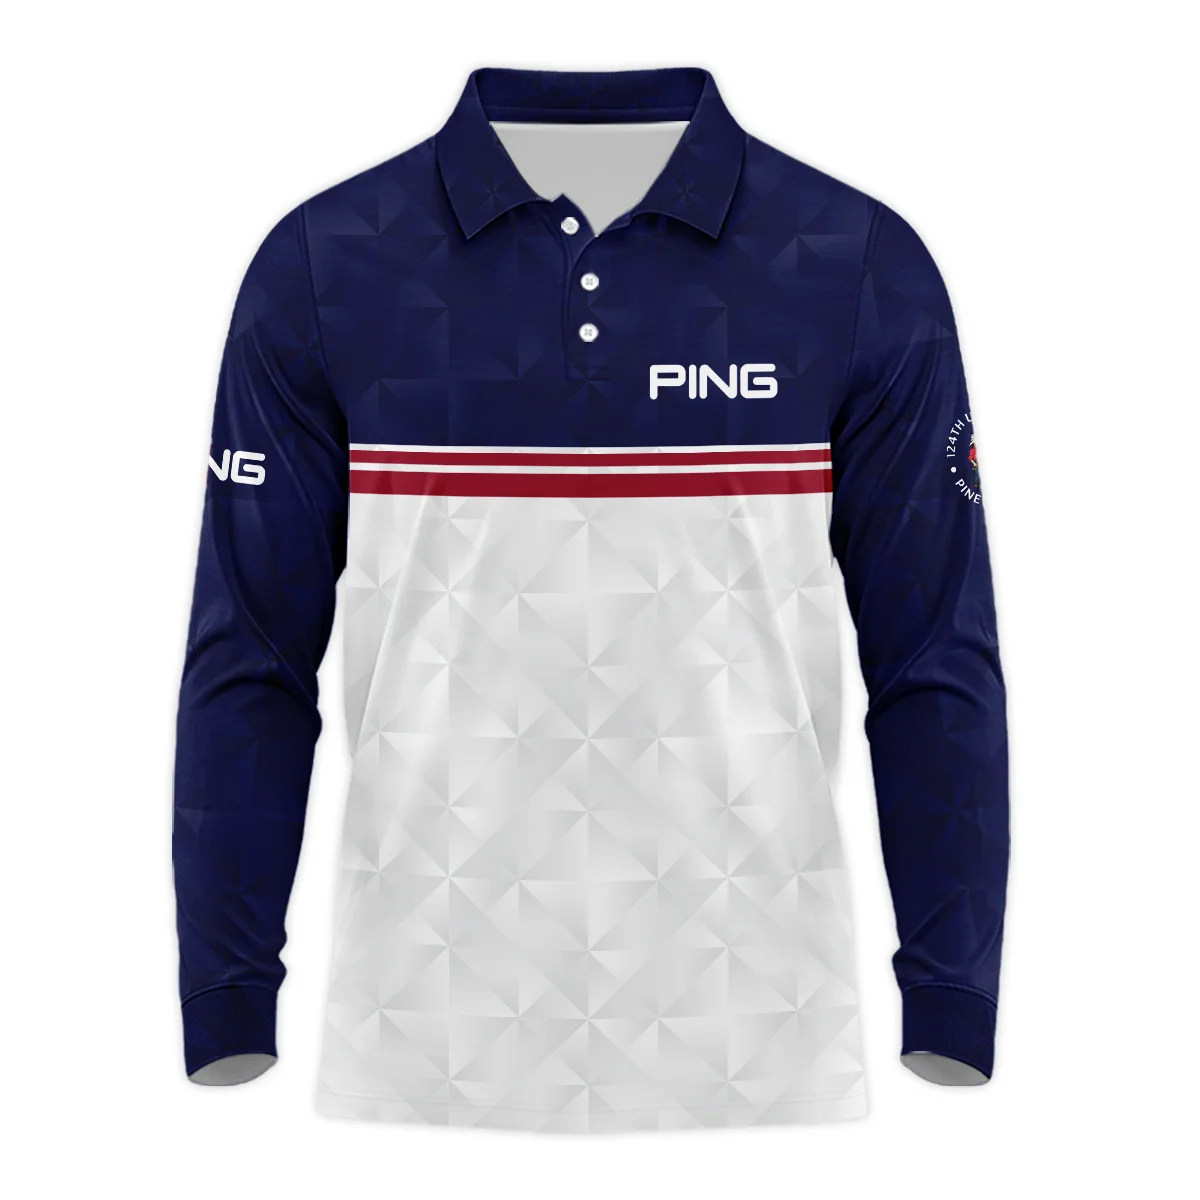 Golf Sport 124th U.S. Open Pinehurst Ping Hoodie Shirt Dark Blue White Abstract Geometric Triangles All Over Print Hoodie Shirt